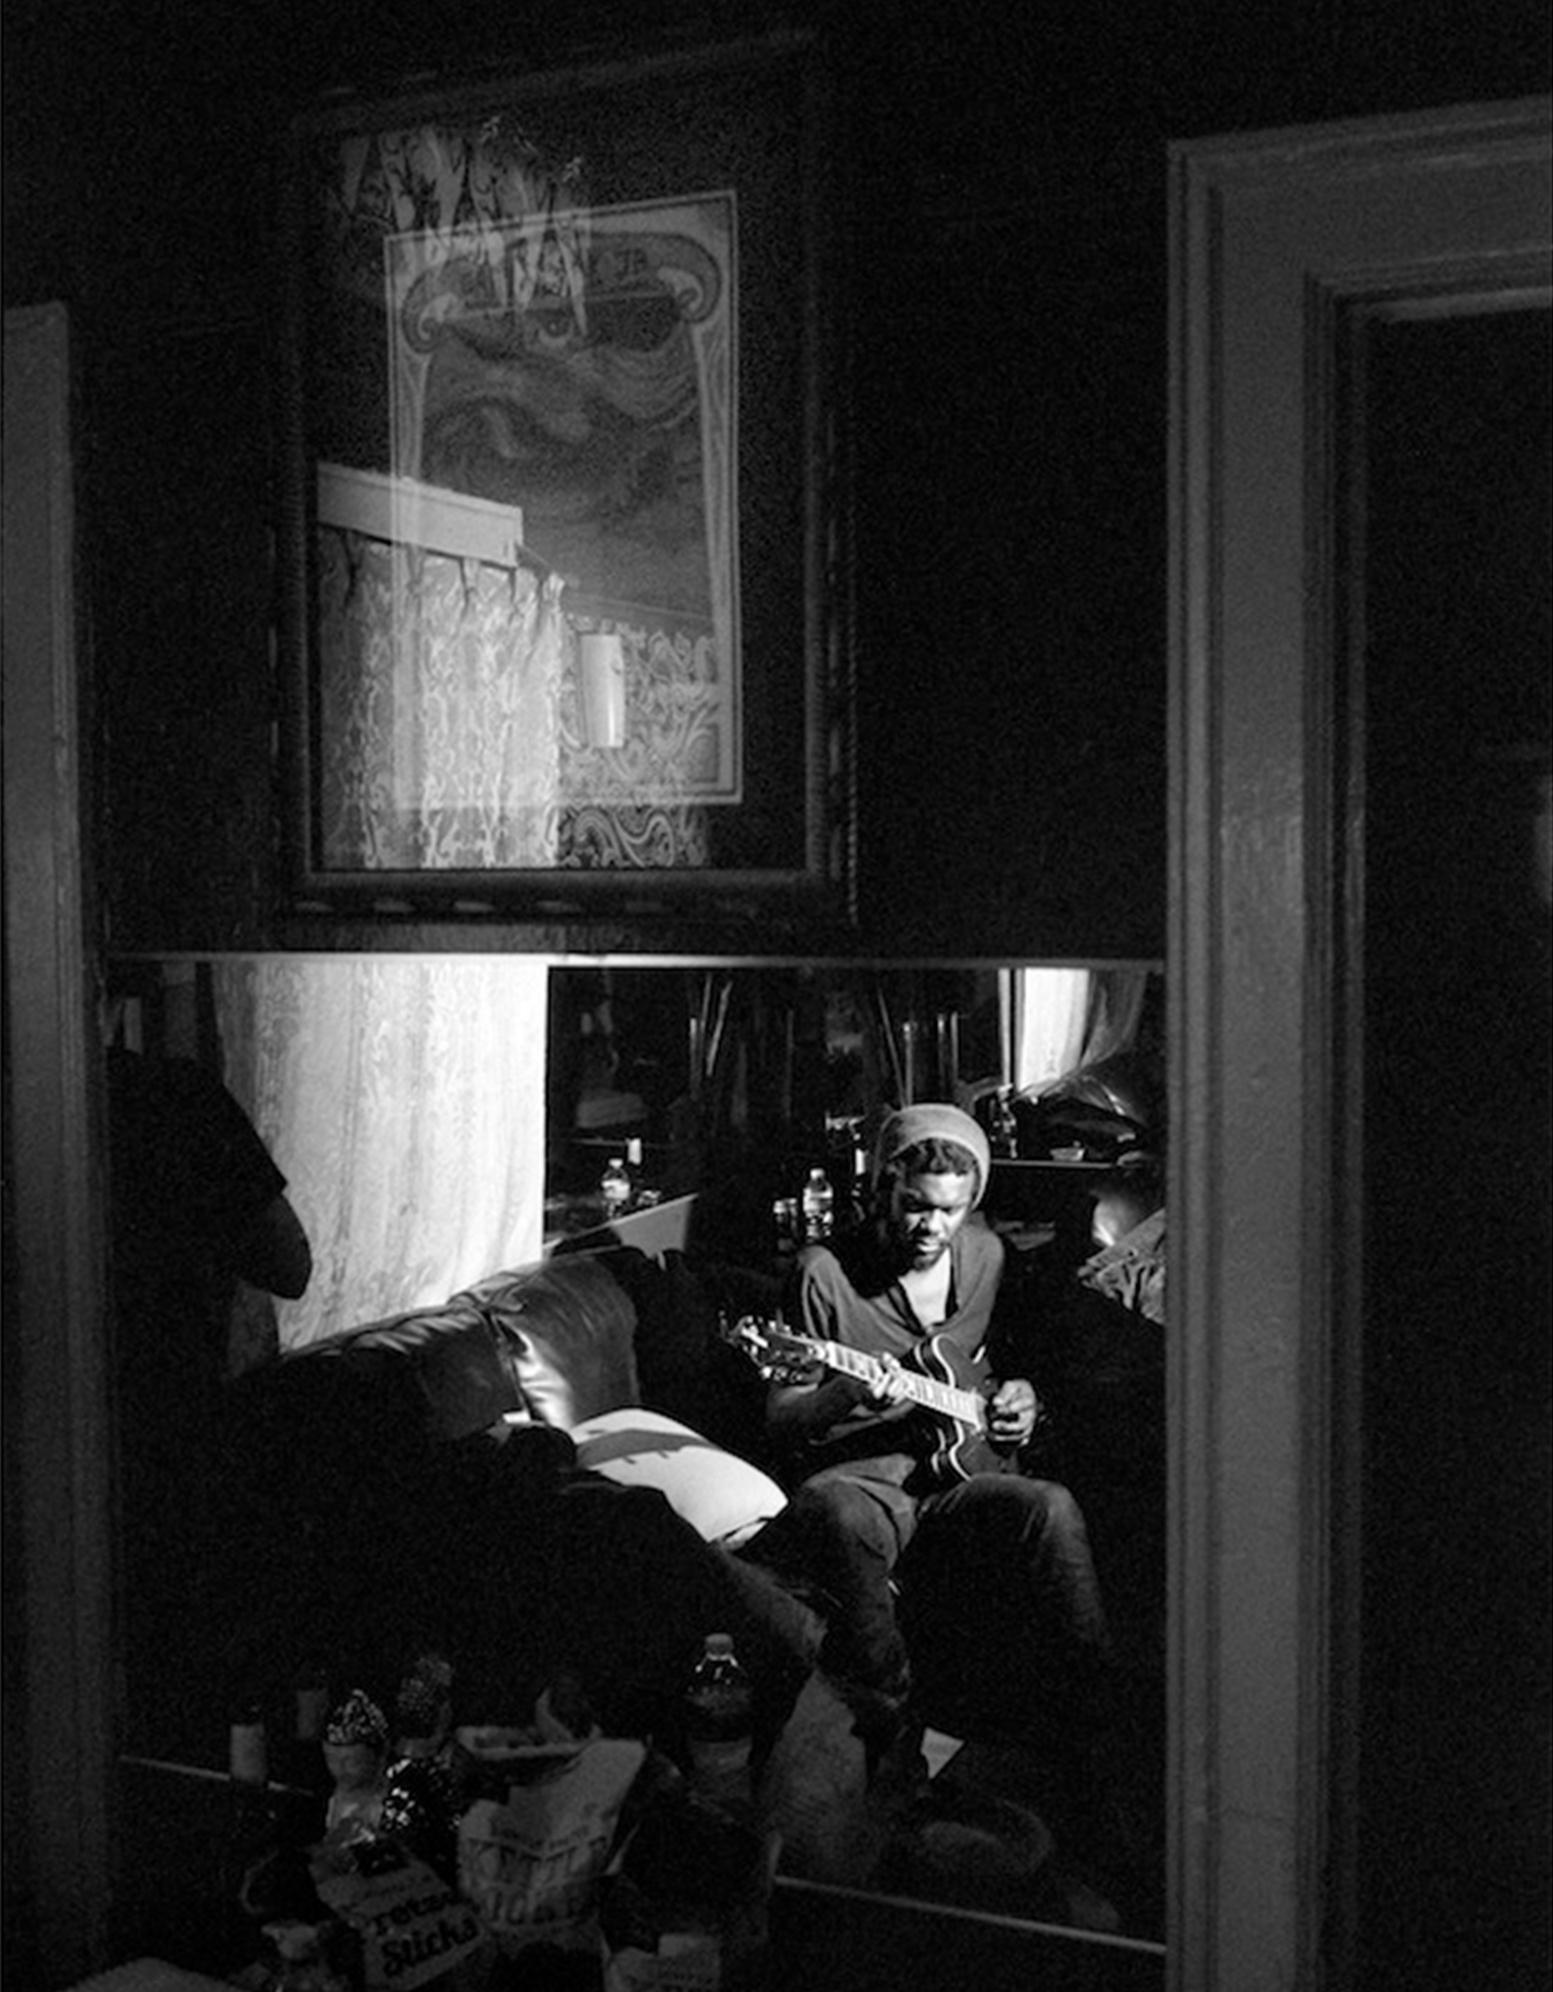 Ben Sklar Black and White Photograph - Gary Clark Jr backstage